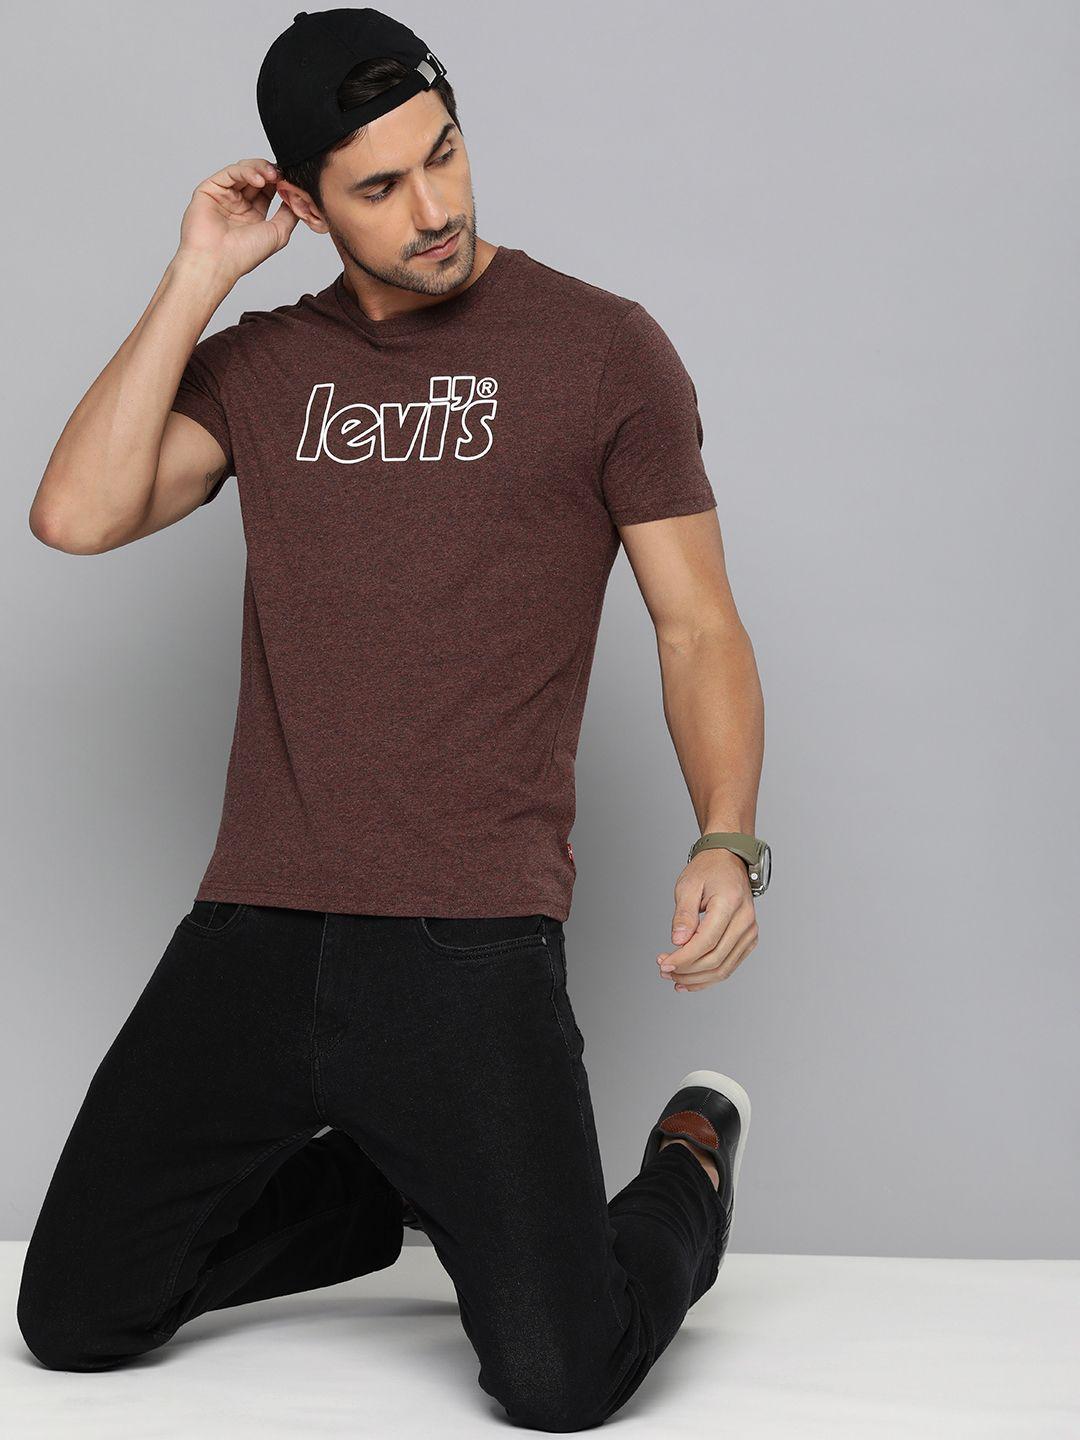 levis brand logo printed t-shirt